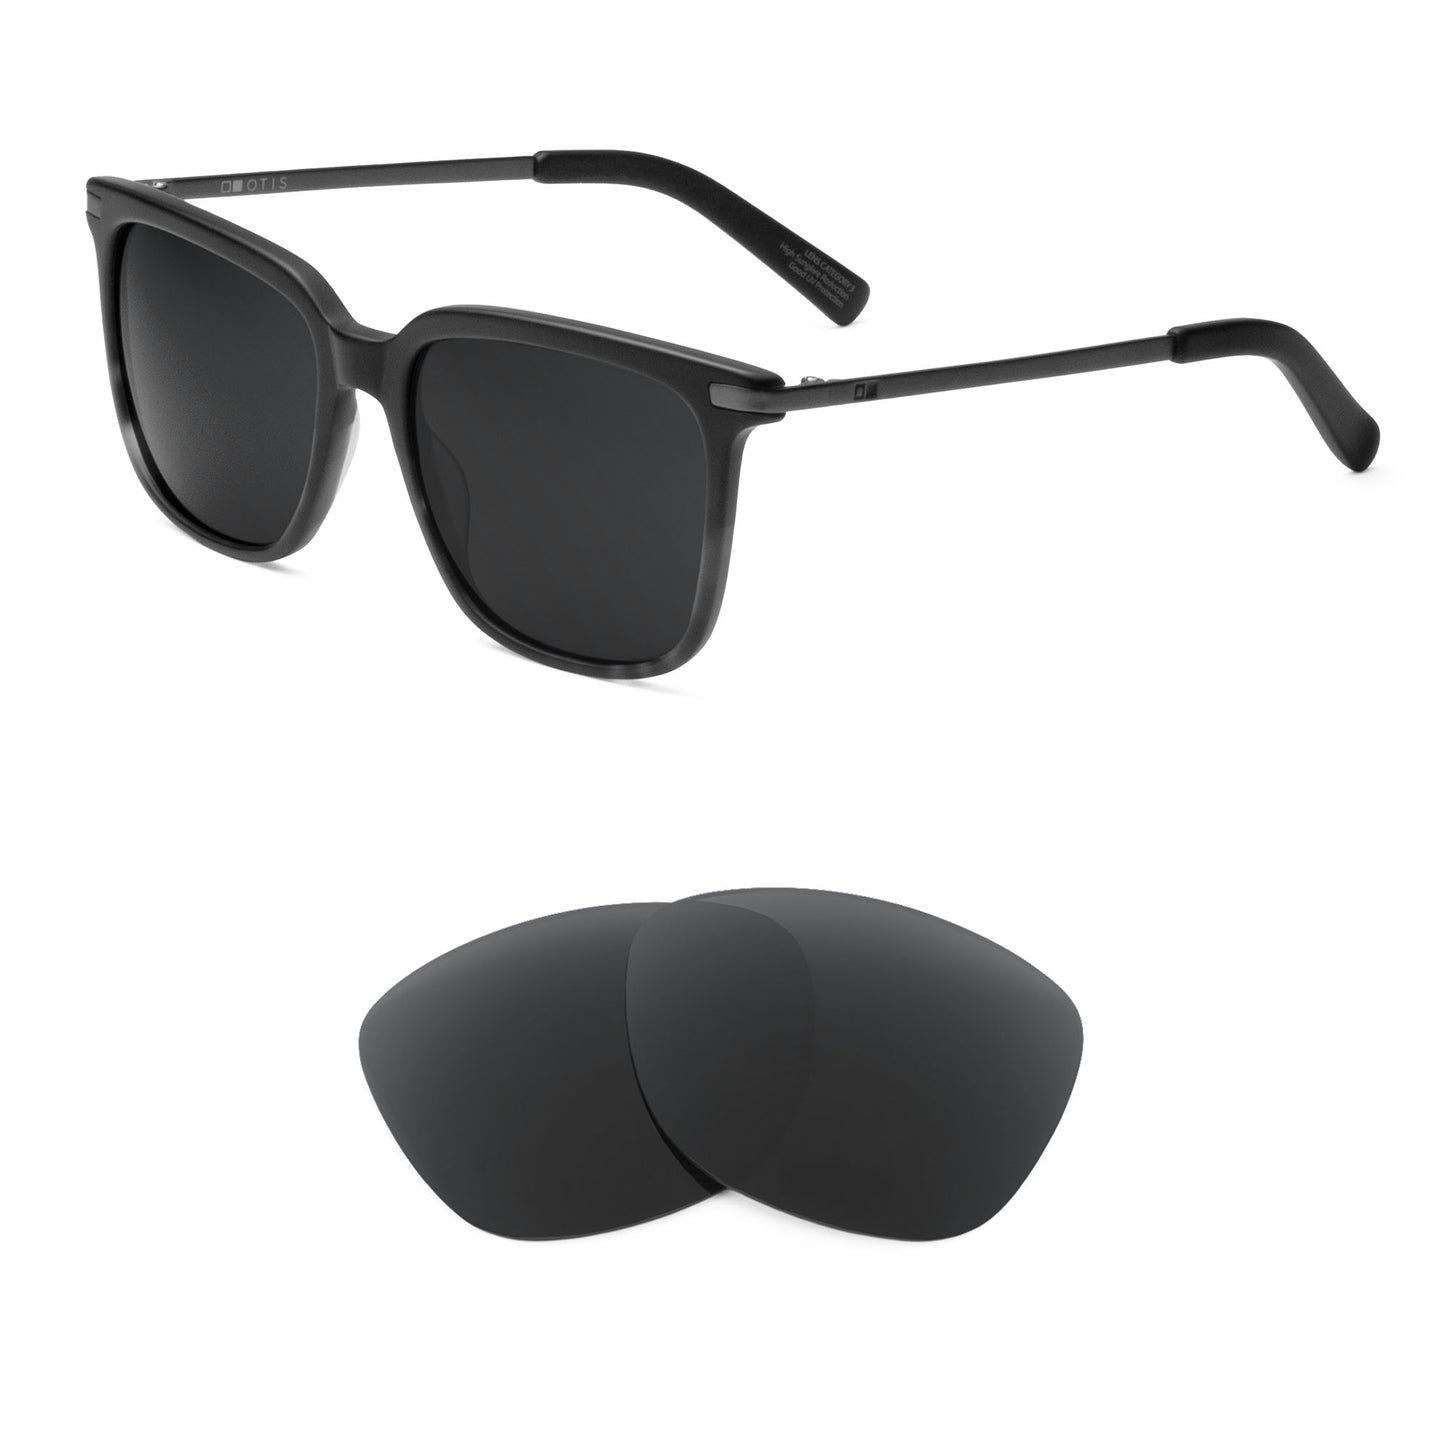 Otis Crossroads sunglasses with replacement lenses